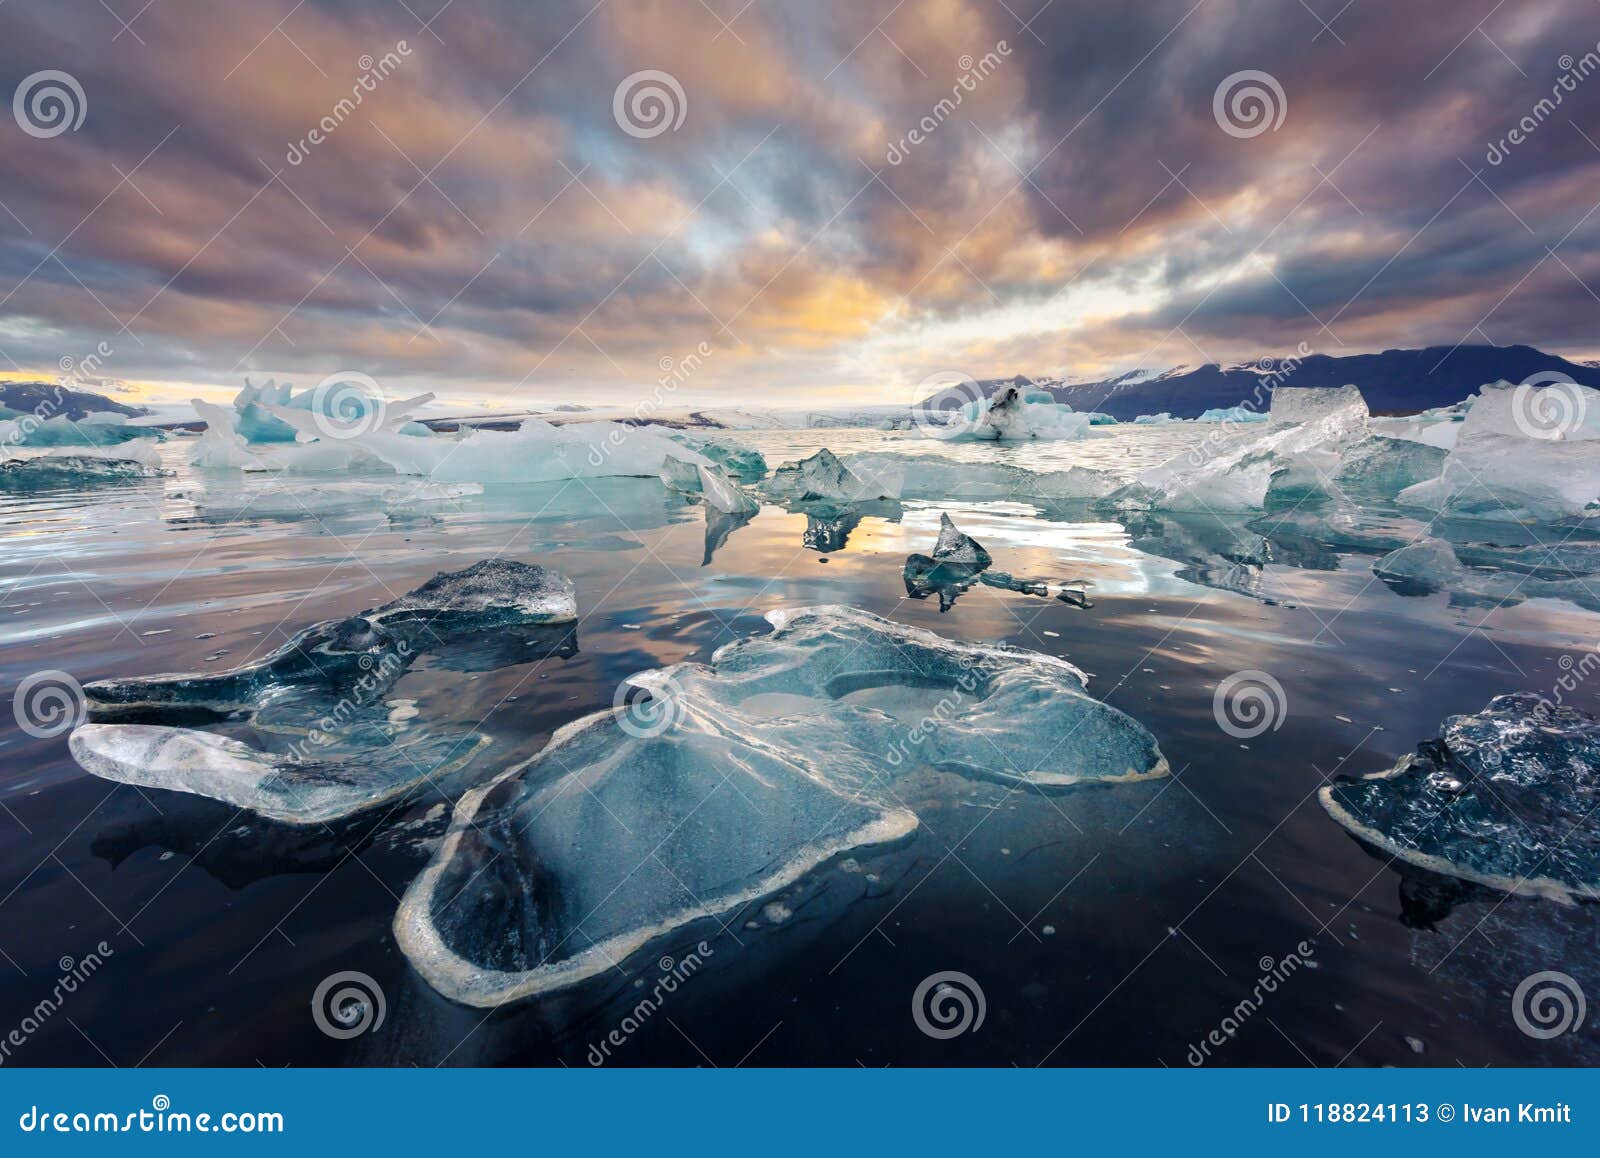 icebergs in jokulsarlon glacial lagoon